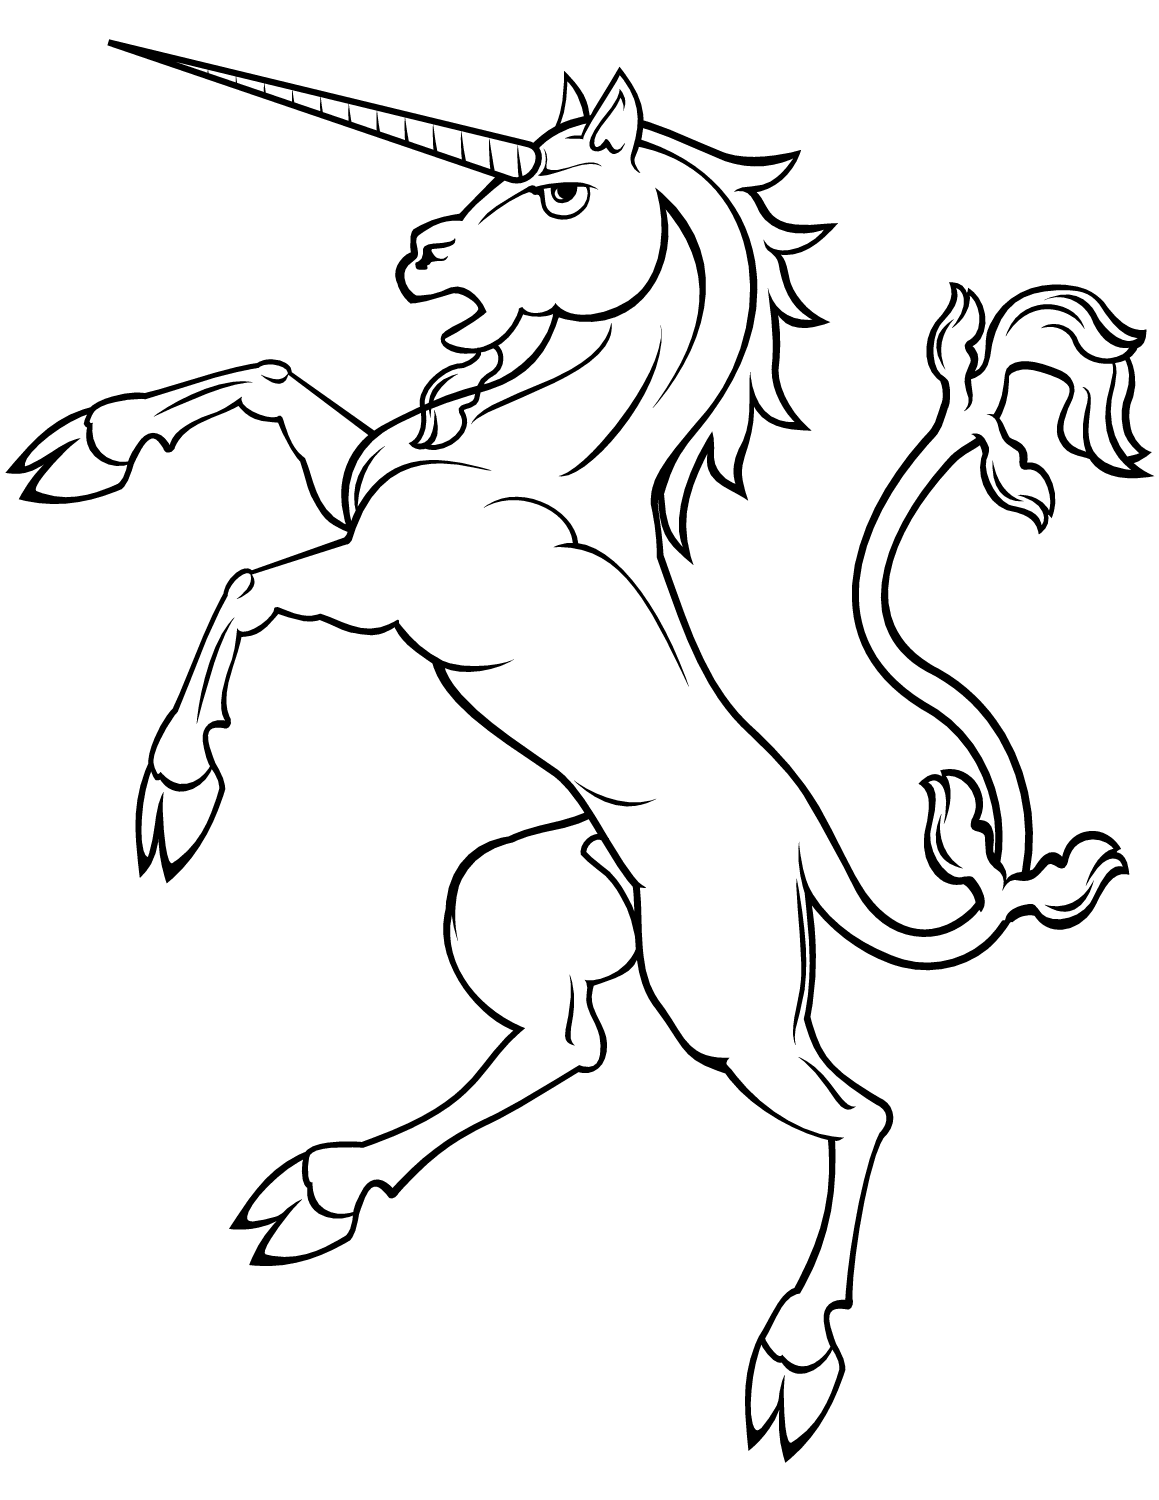 Dibujos de Criando Unicornio para colorear